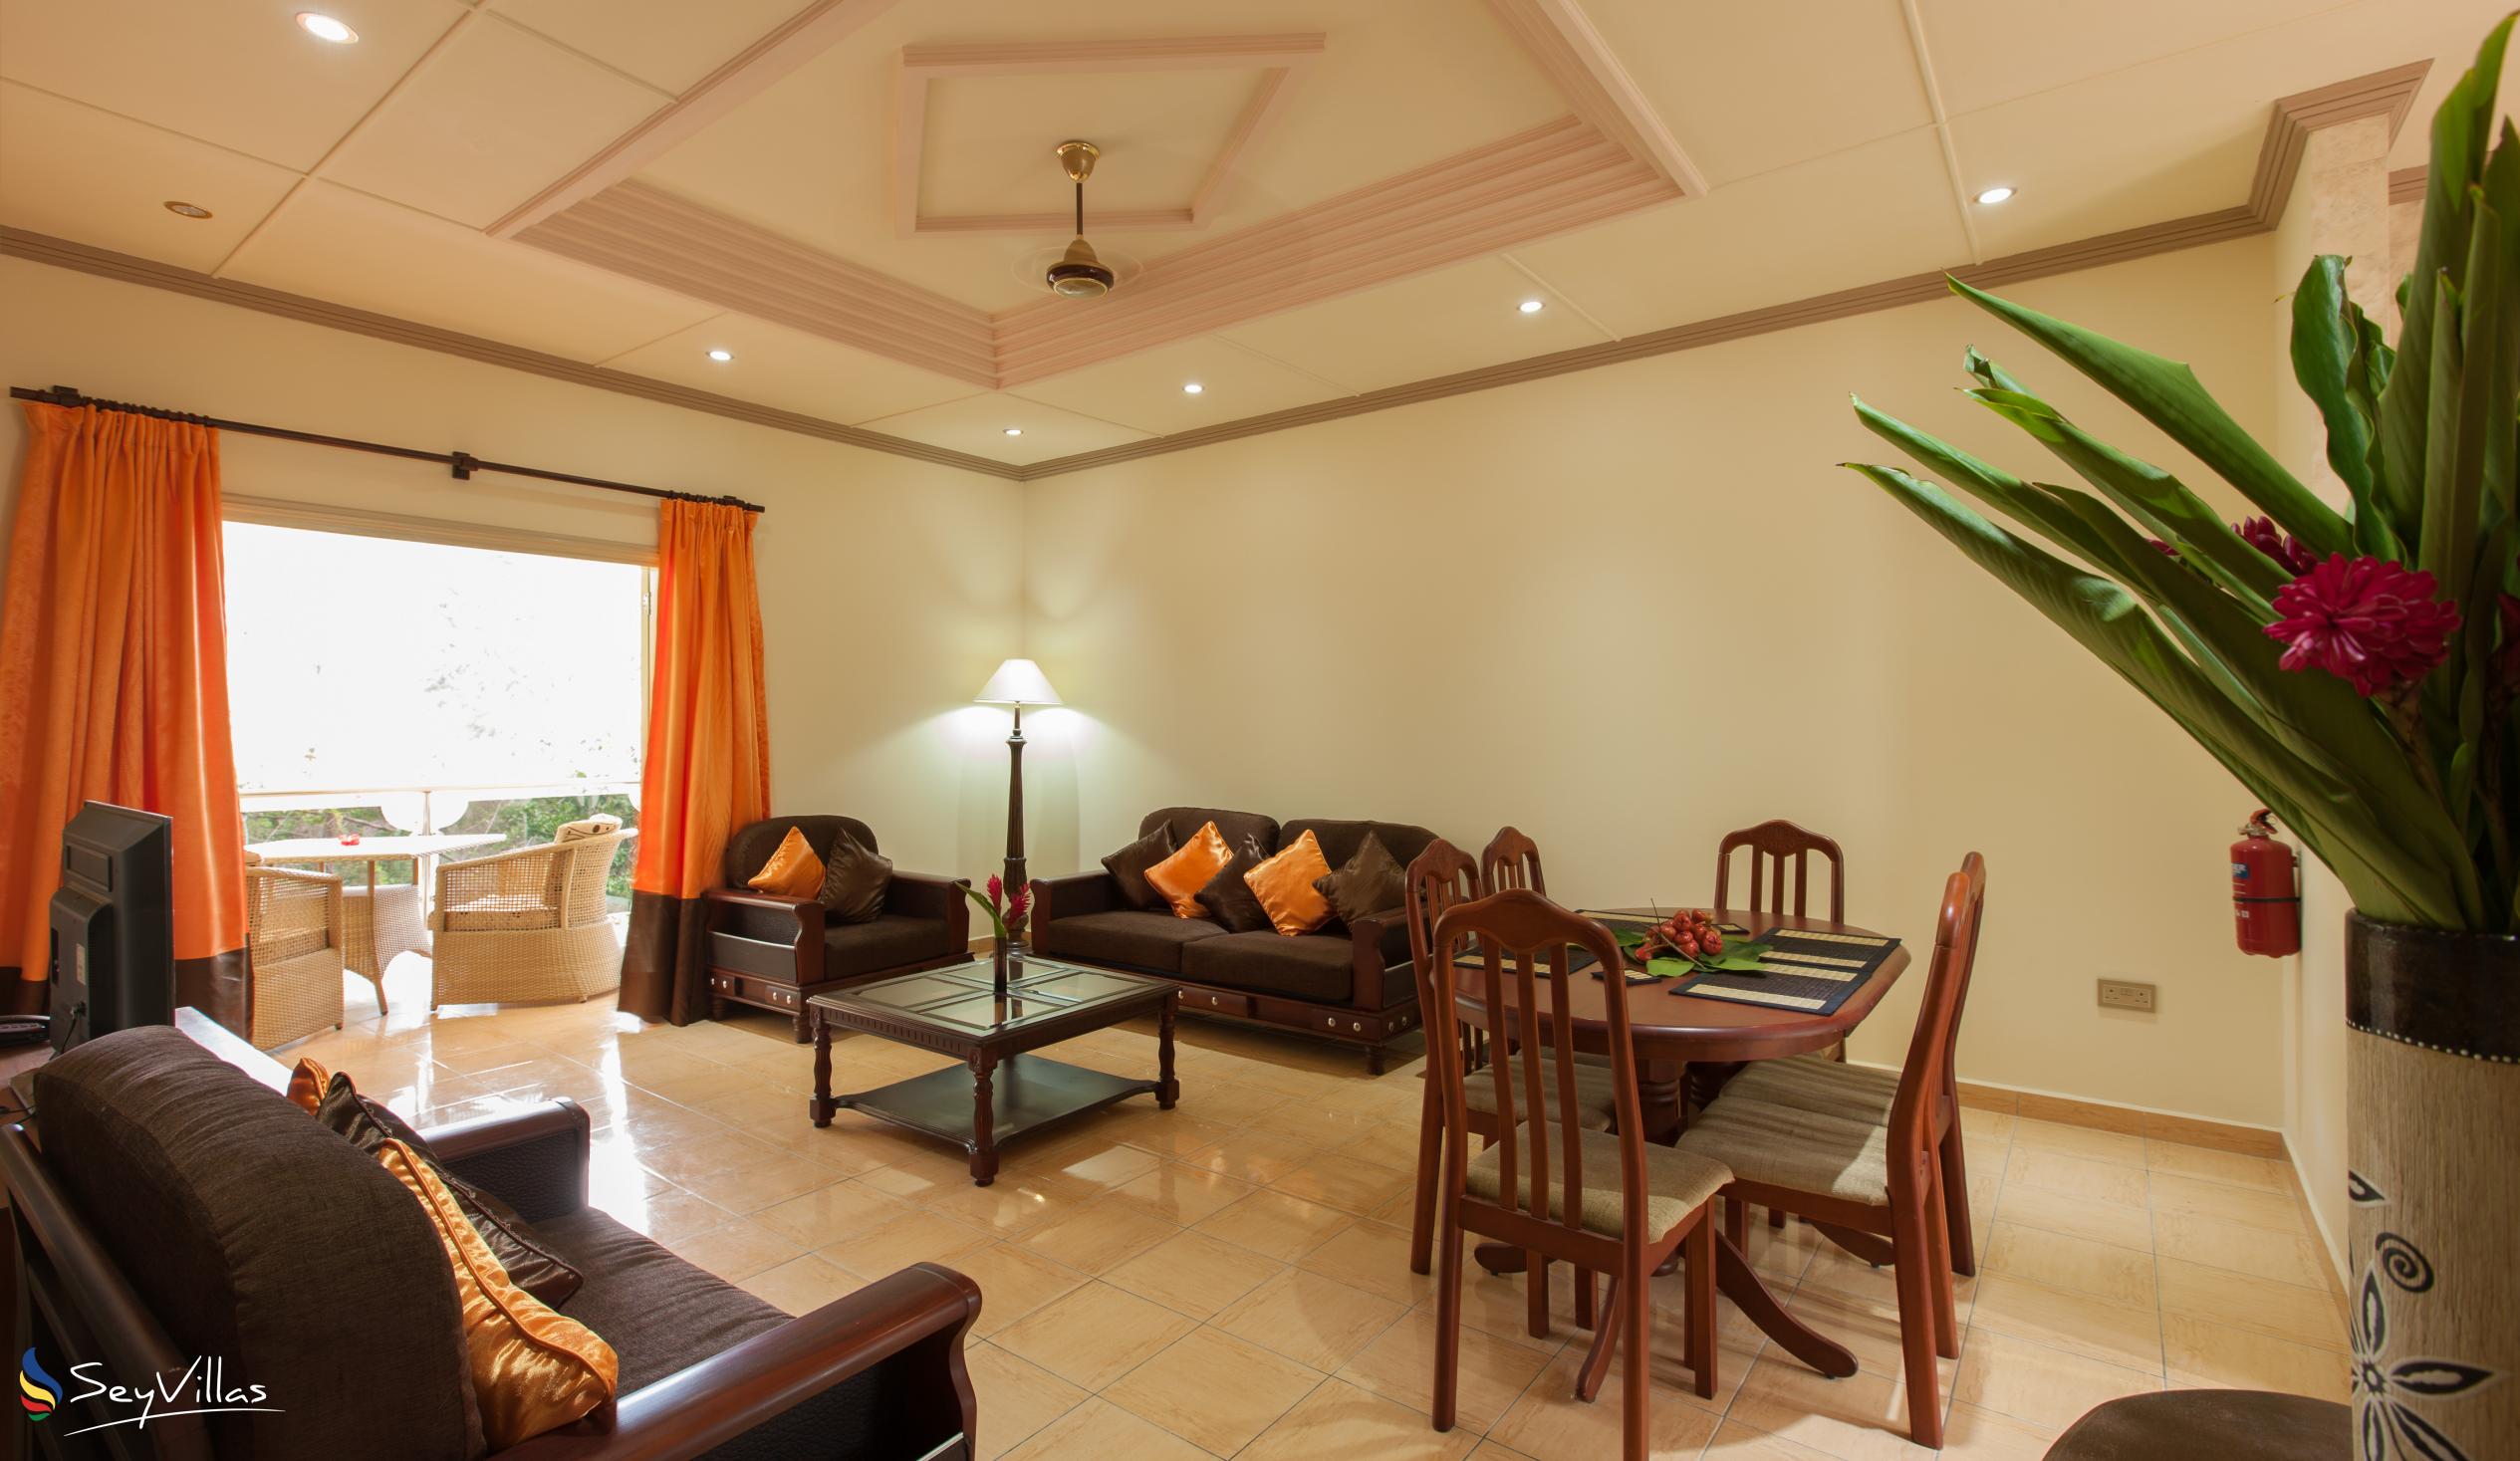 Foto 93: Chez Bea Villa - Appartement 1 chambre - Praslin (Seychelles)